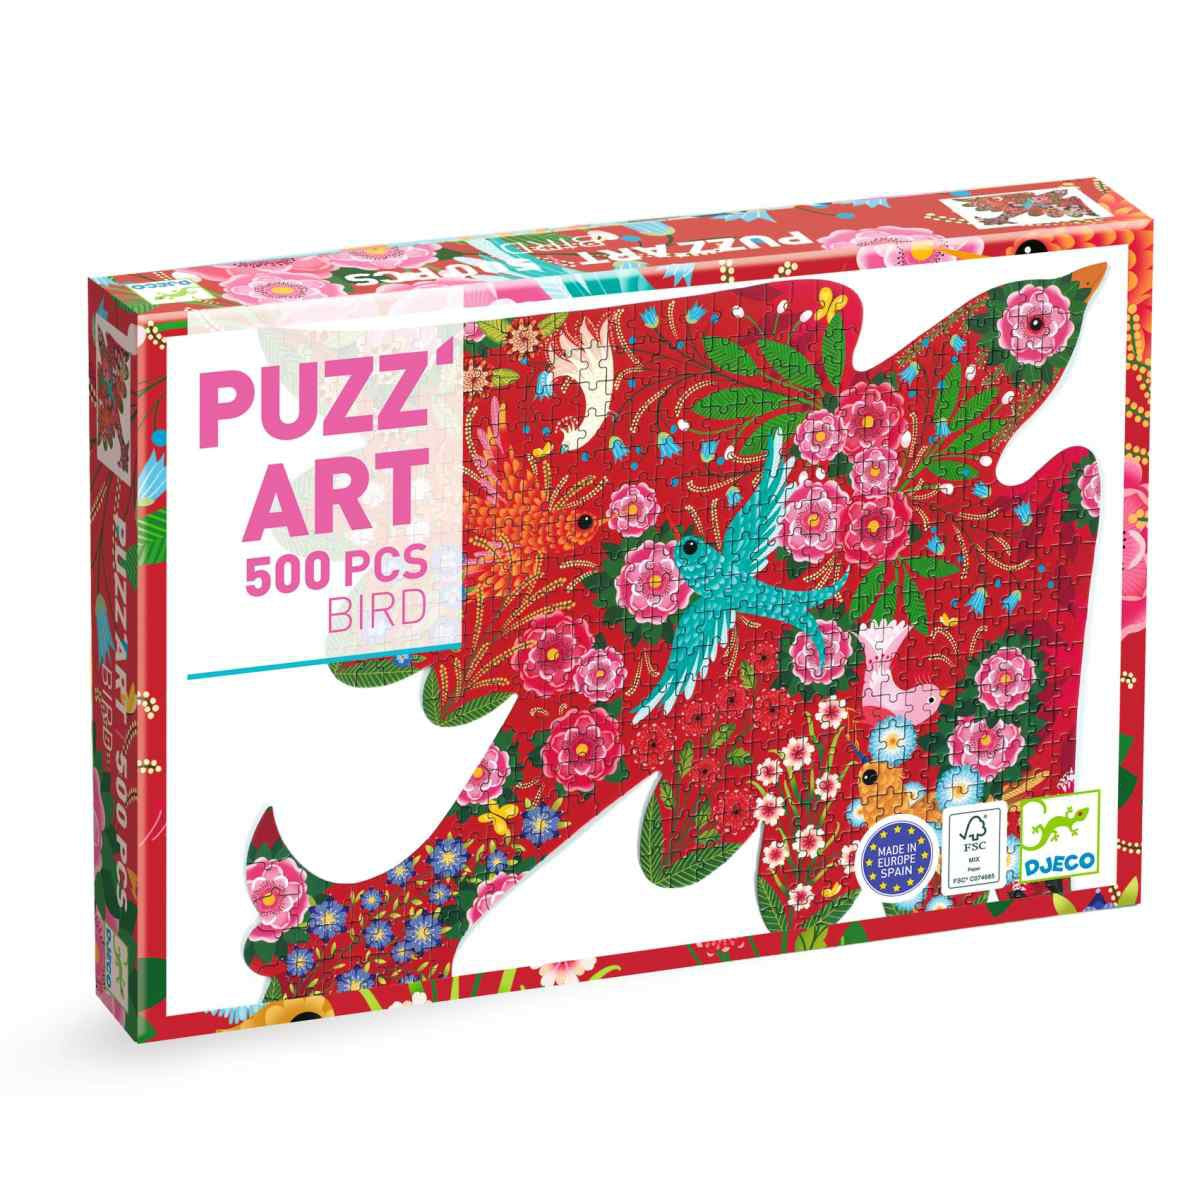 Puzzle Chameleon Puzz'art 150 pièces Djeco DJ07655